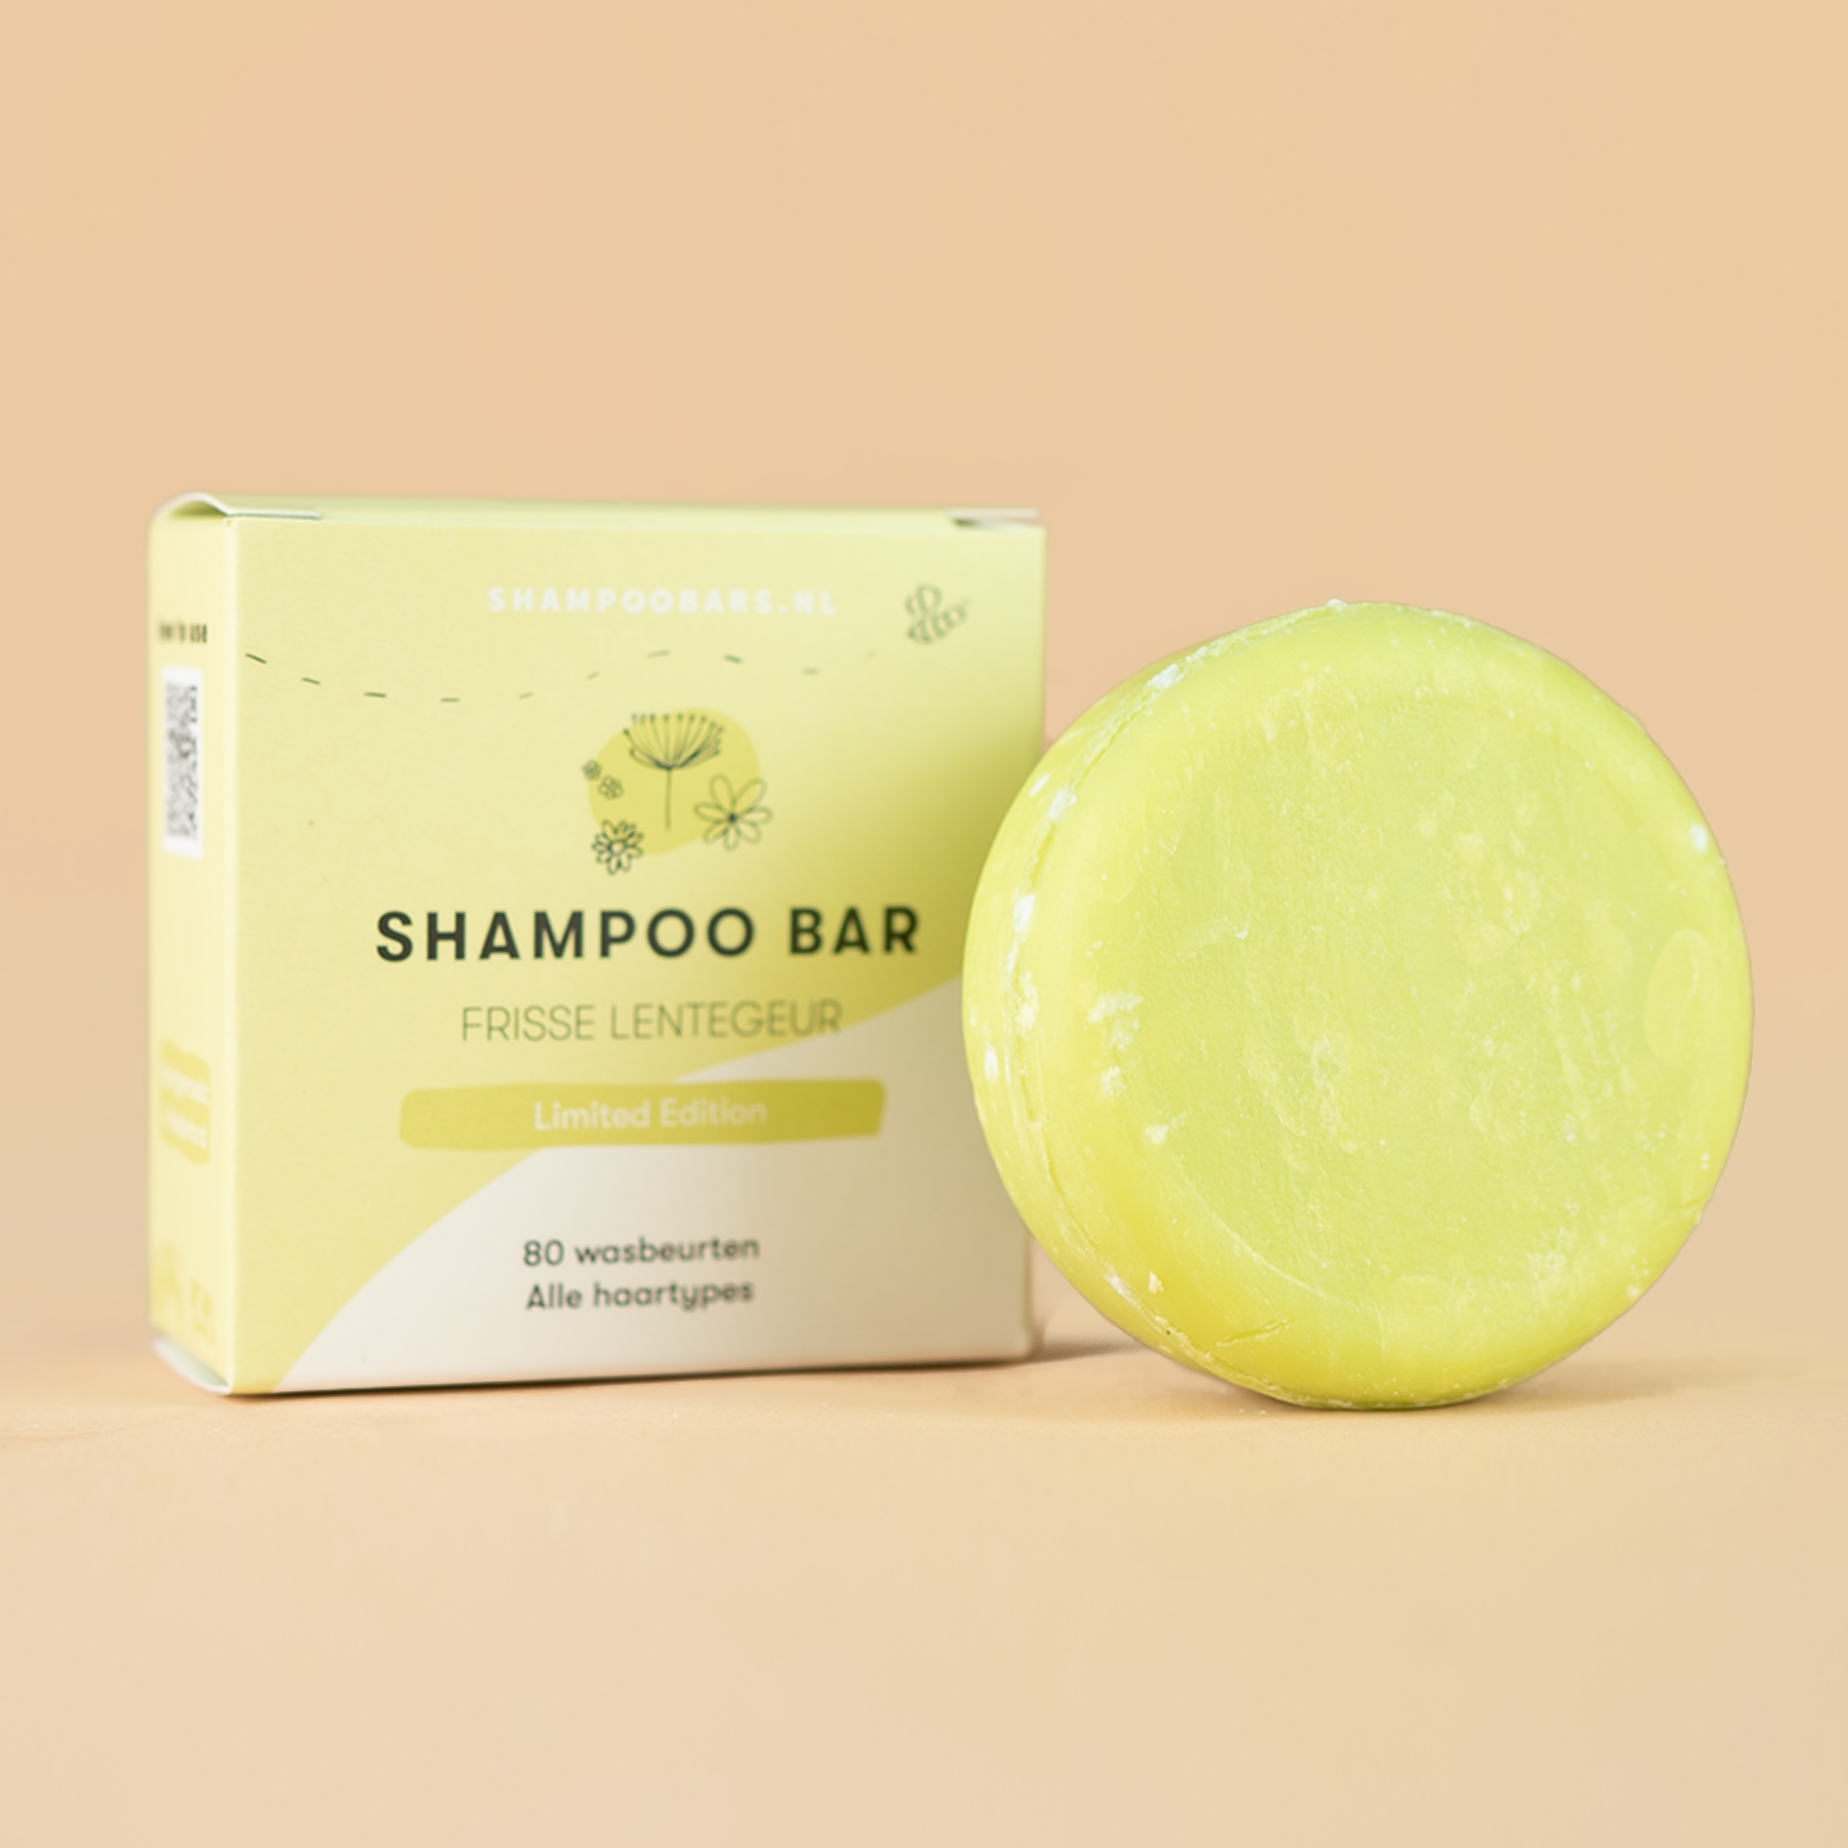 Industrialiseren Parameters lassen Shampoo zonder parabenen - Shampoo Bars